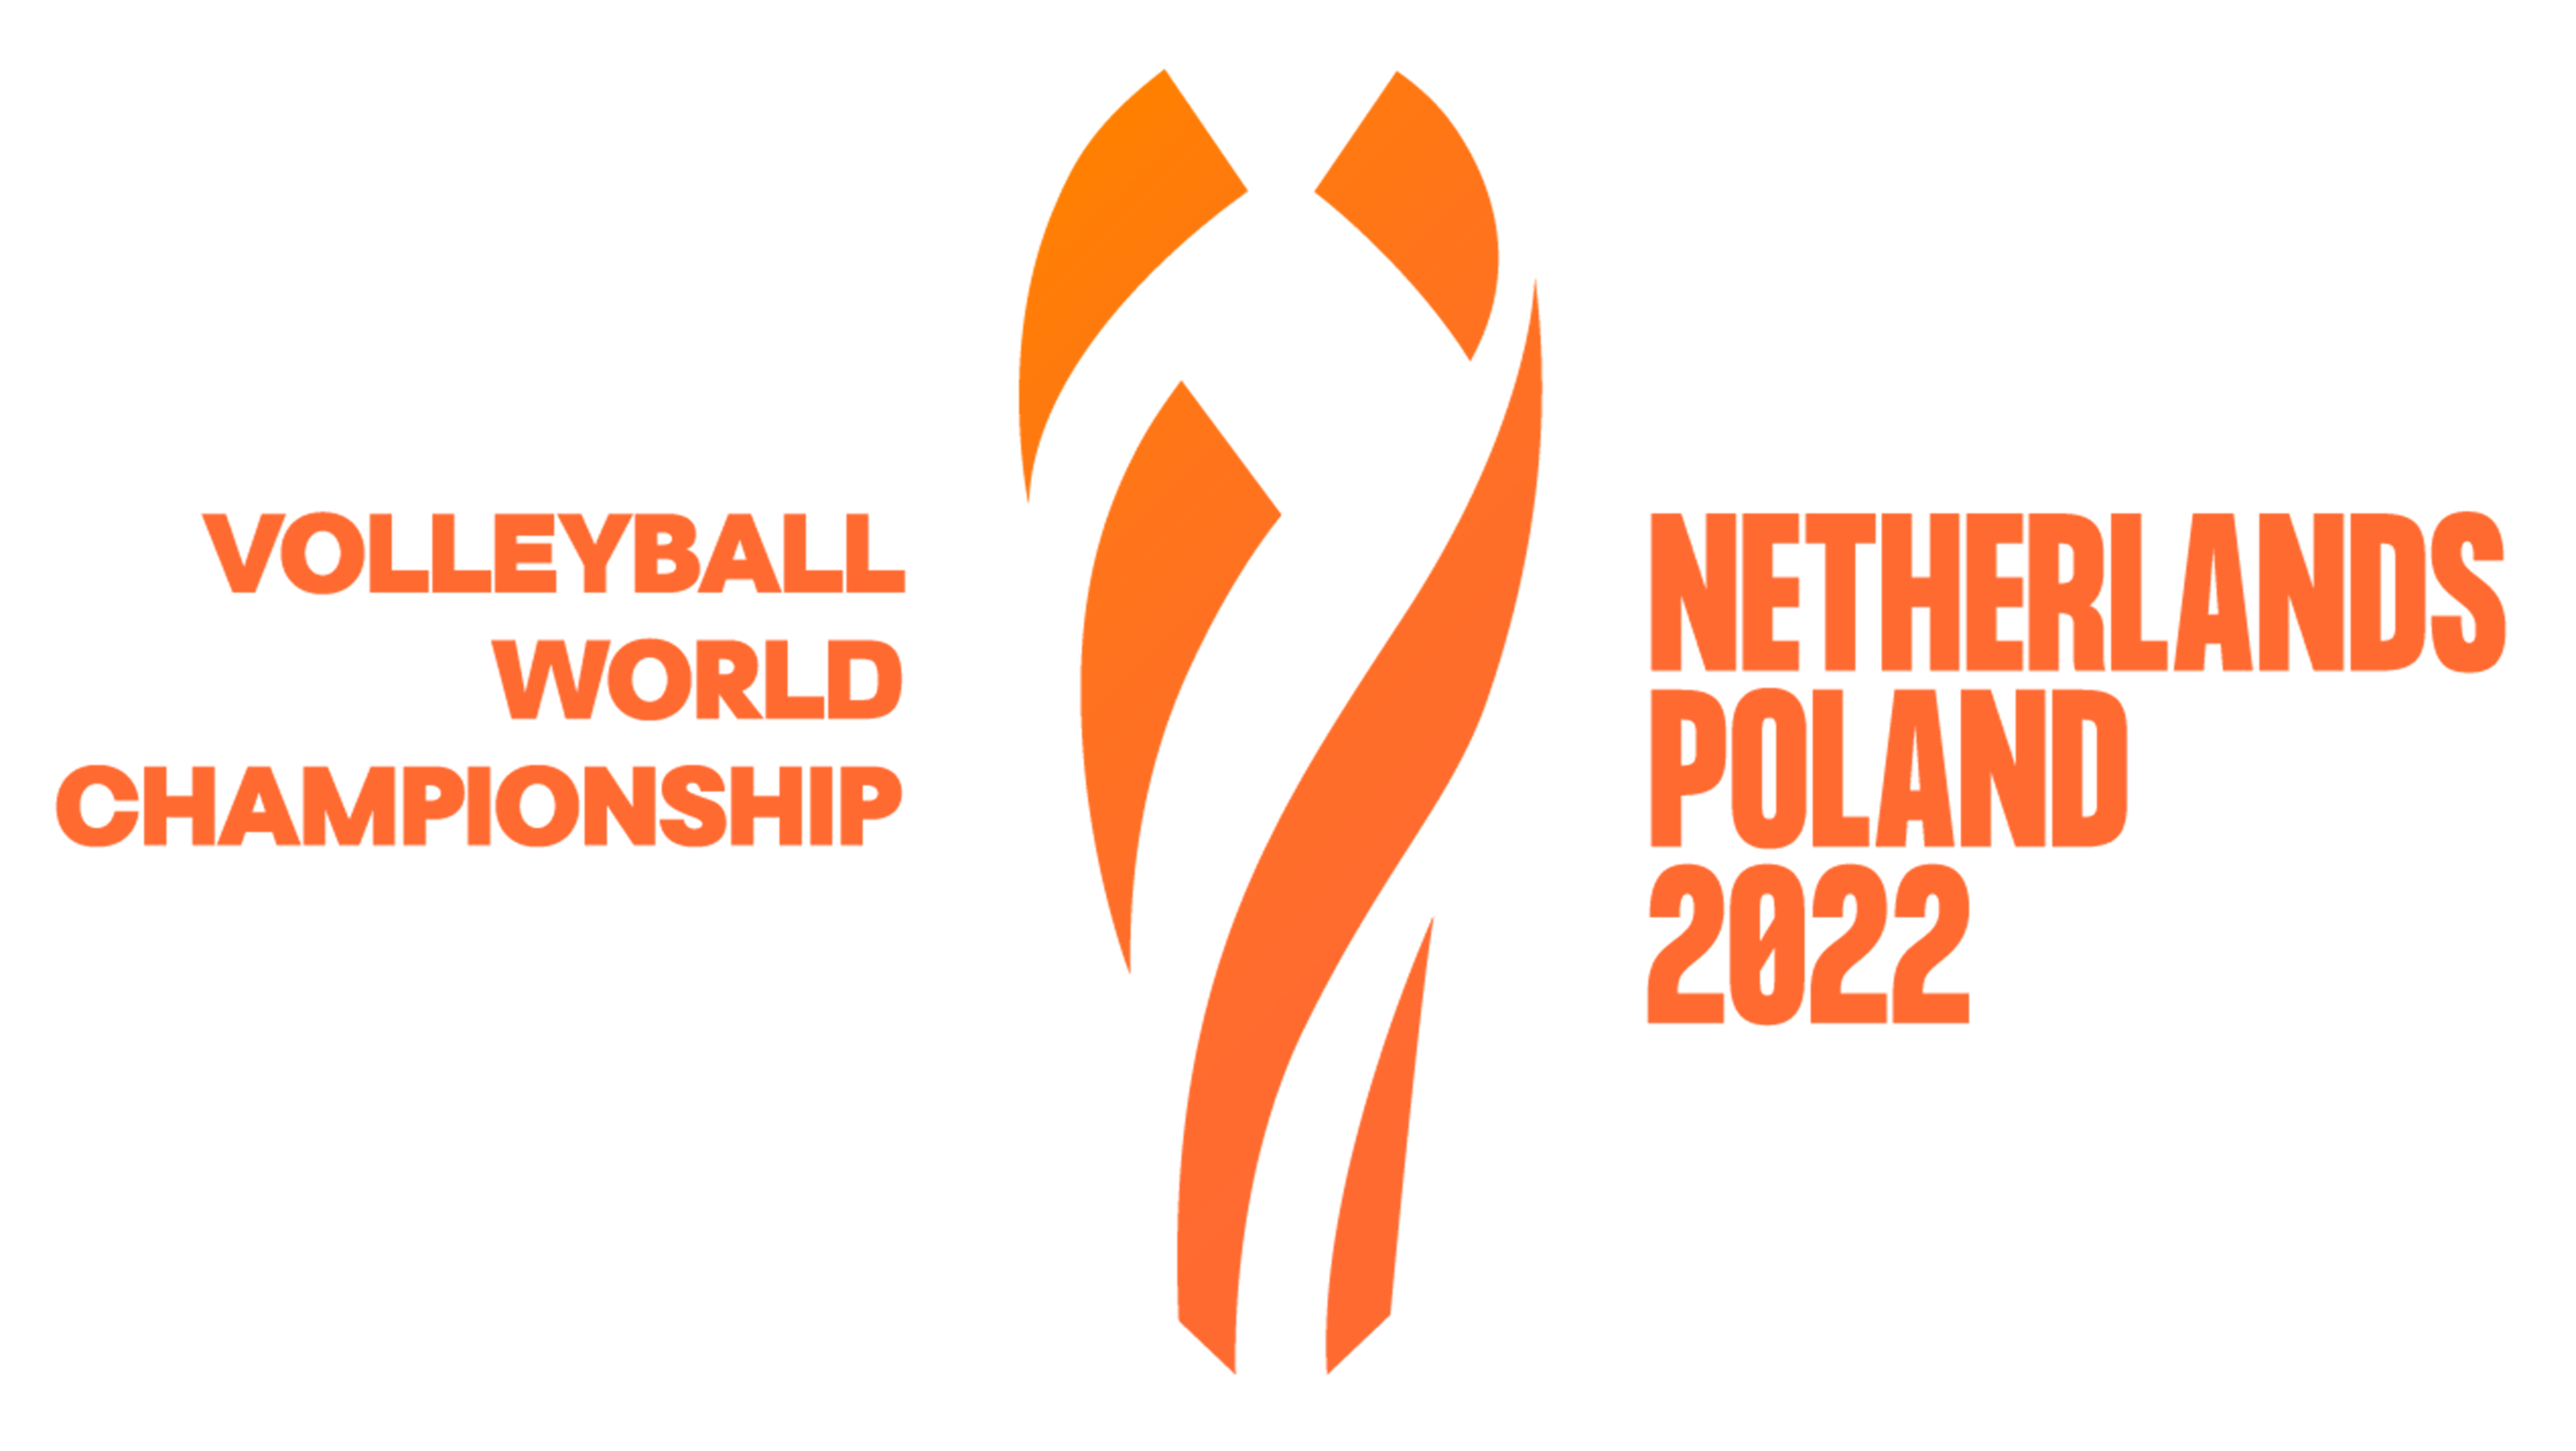 Women's World Championship 2022